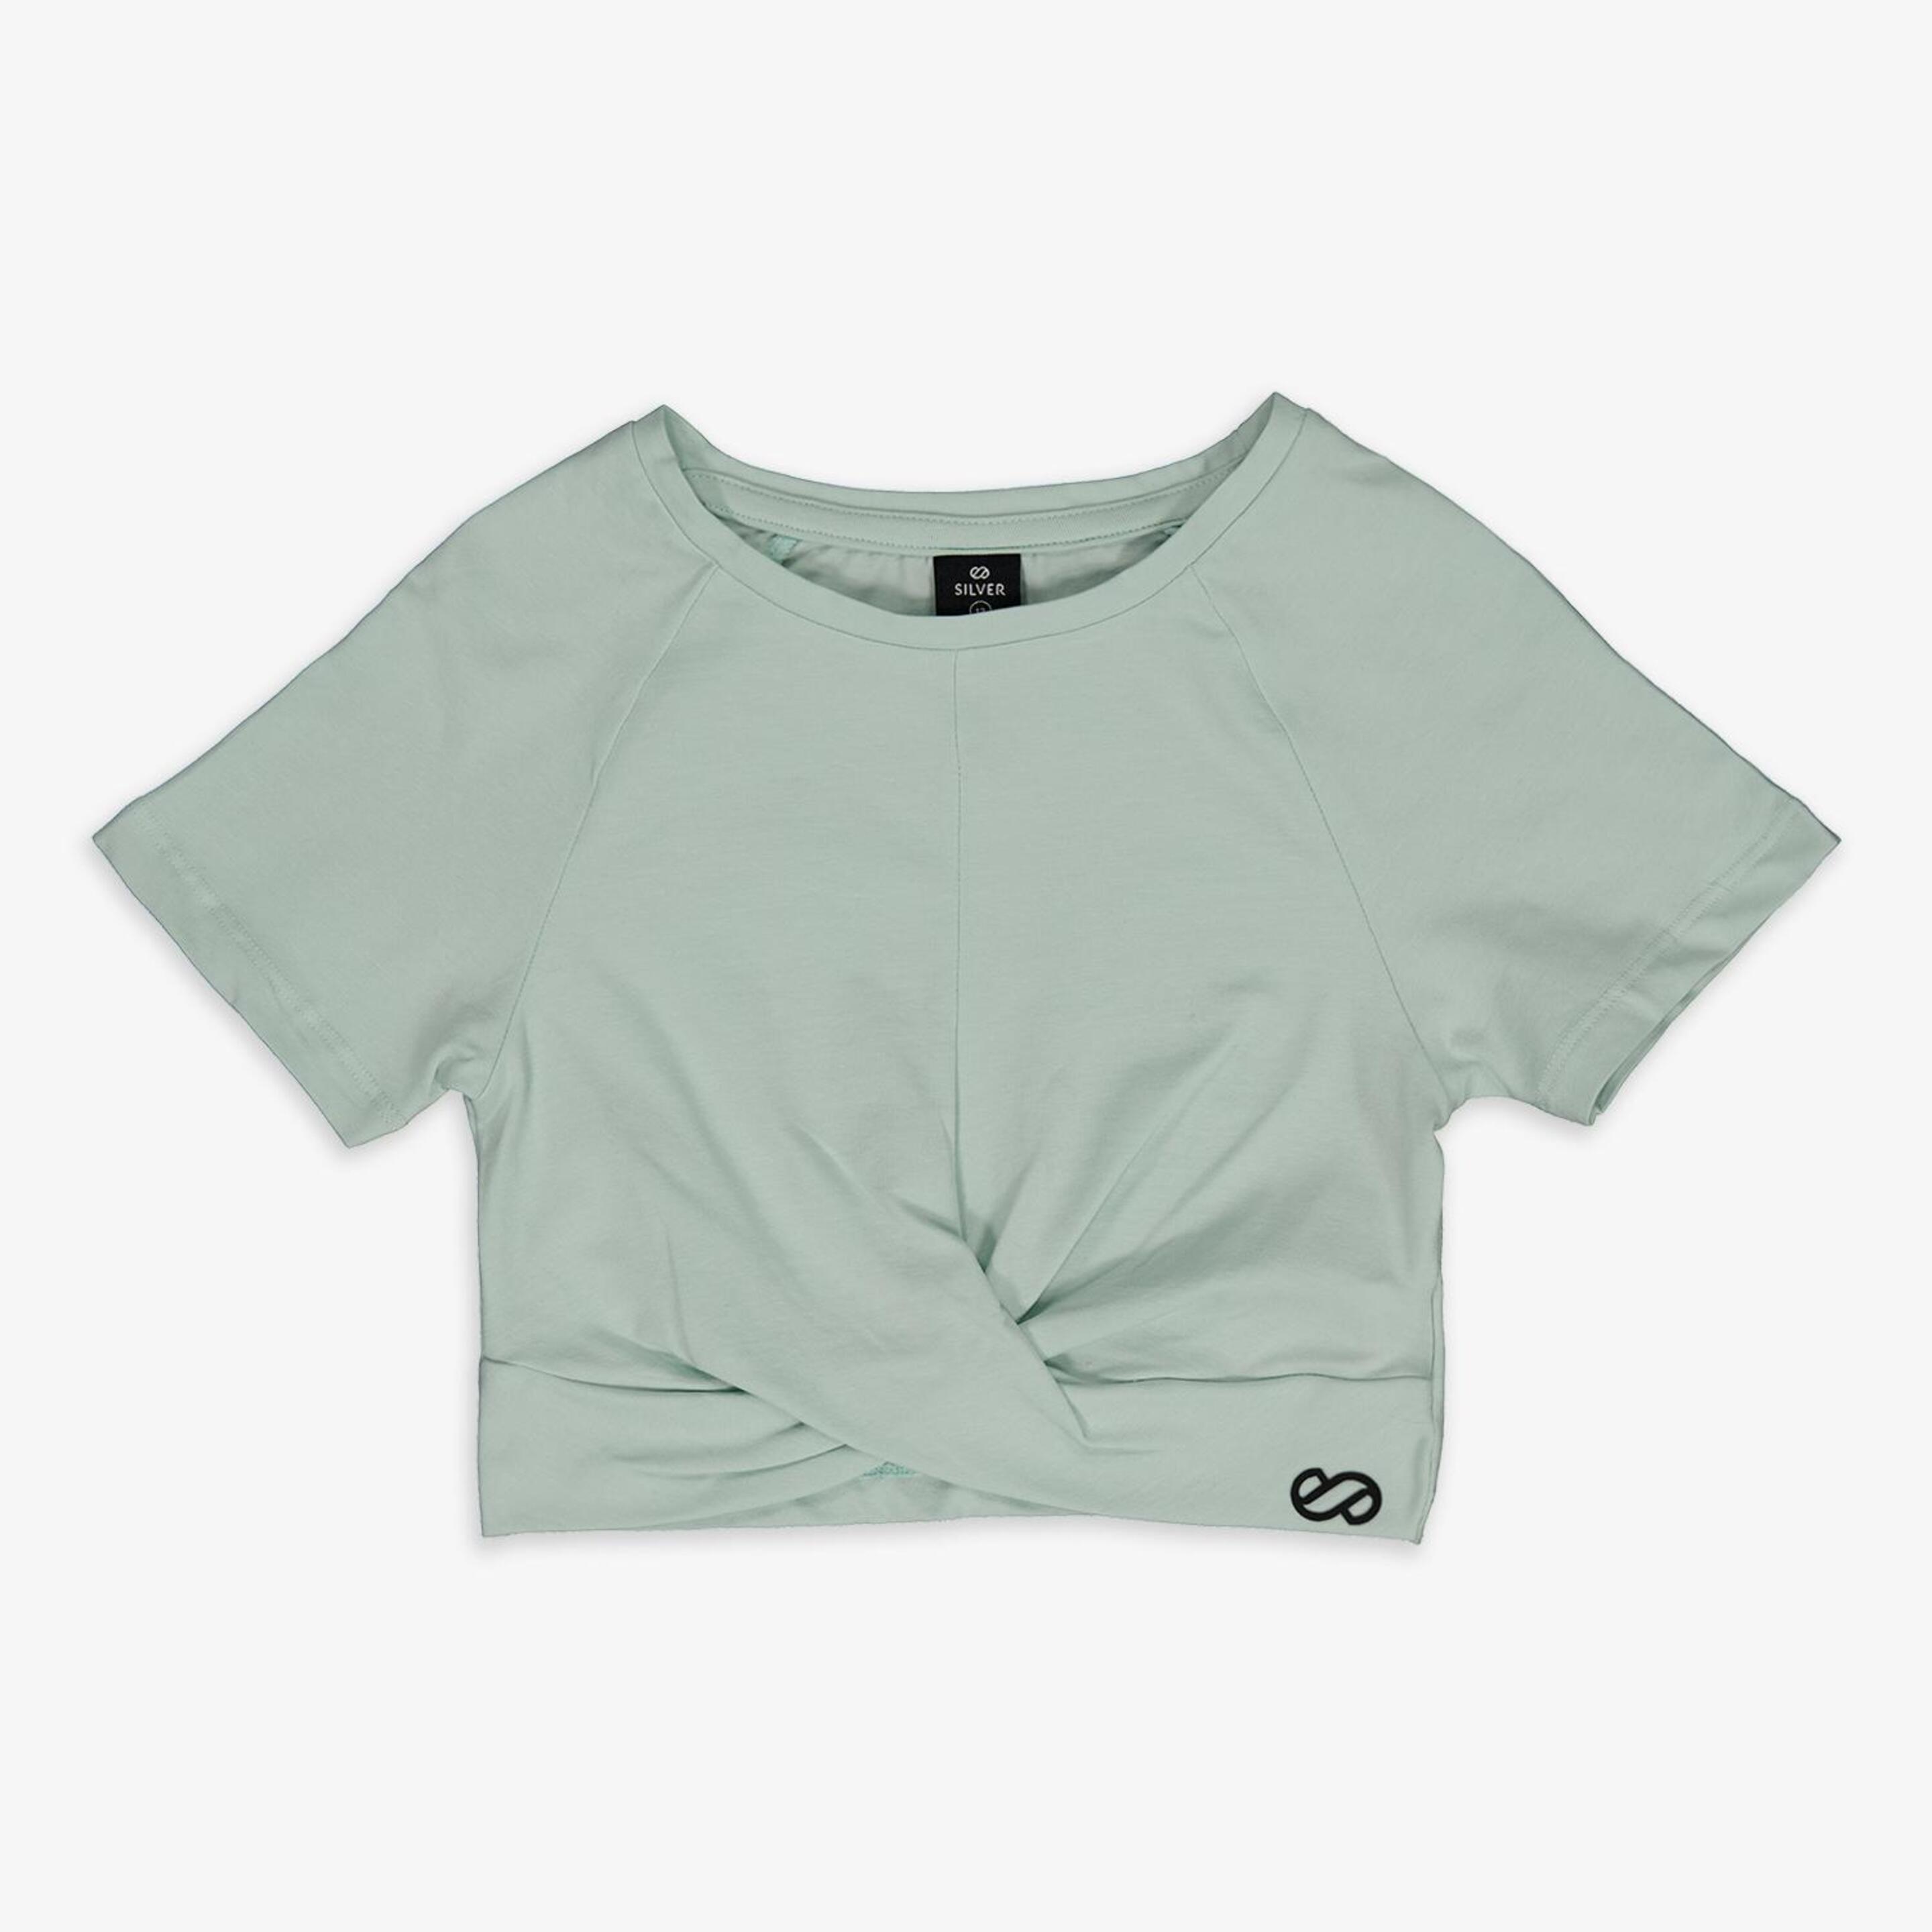 Silver Etnosurf - verde - T-shirt Crop Rapariga